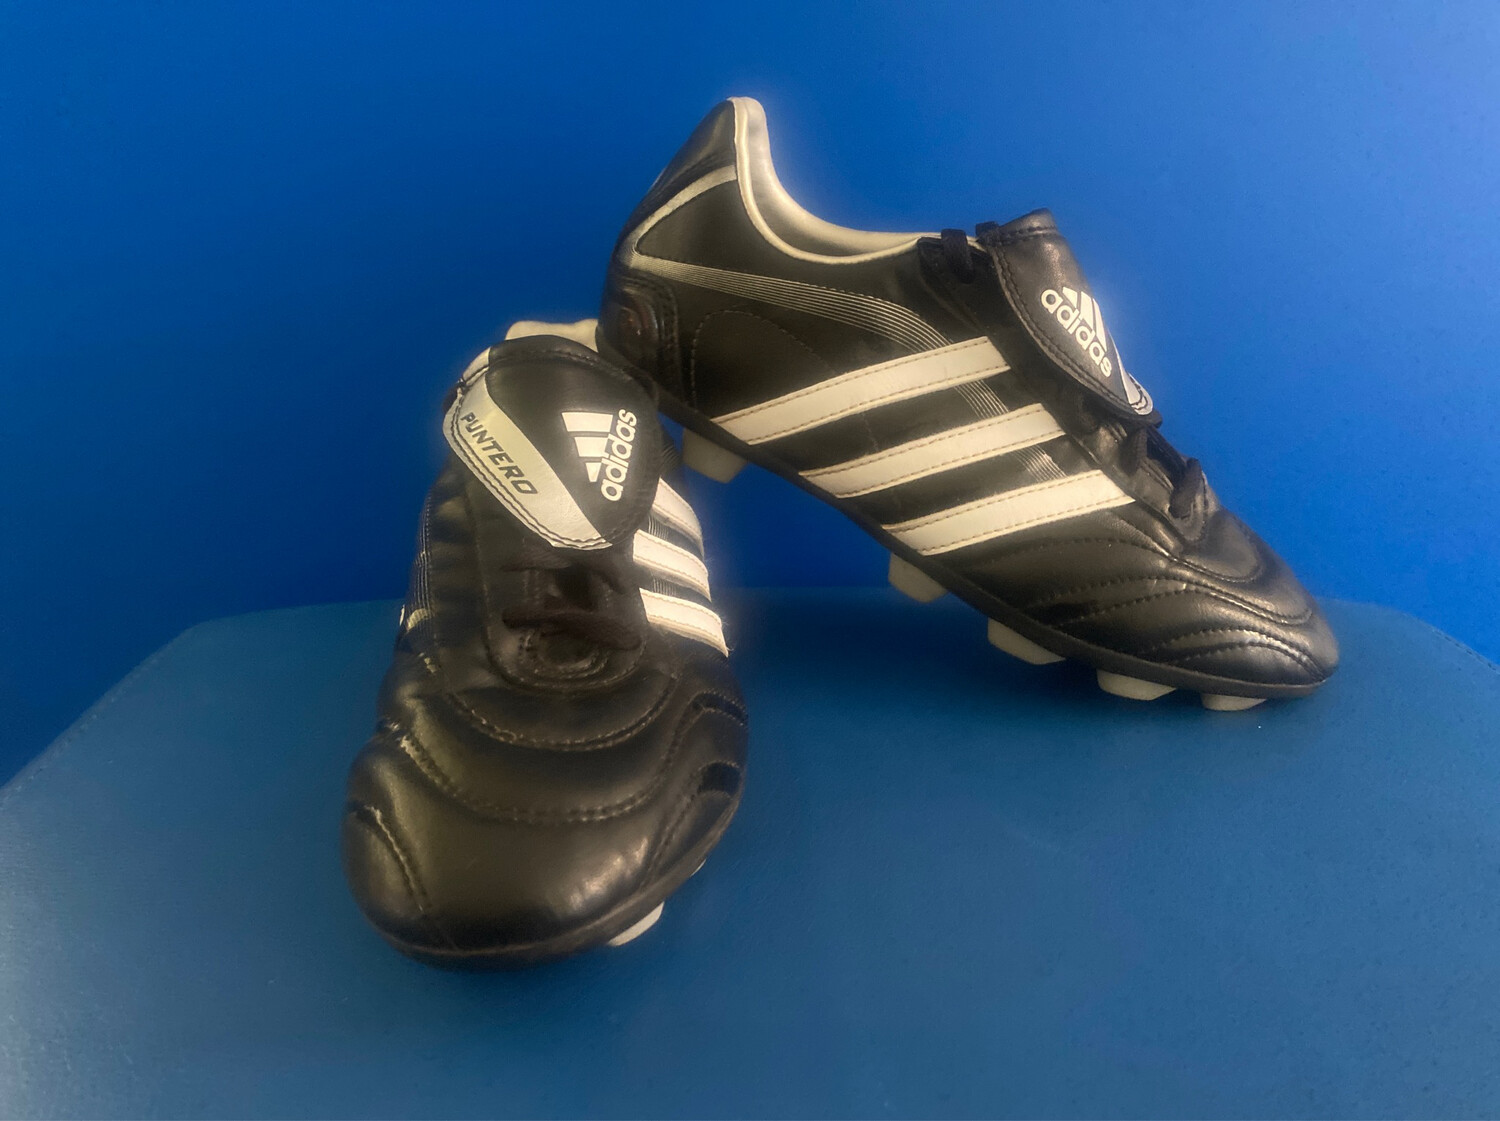 Puntero IV TRX HG Junior Football boots (Near-new) (EC645) - 25Mar23 - Receipt #11